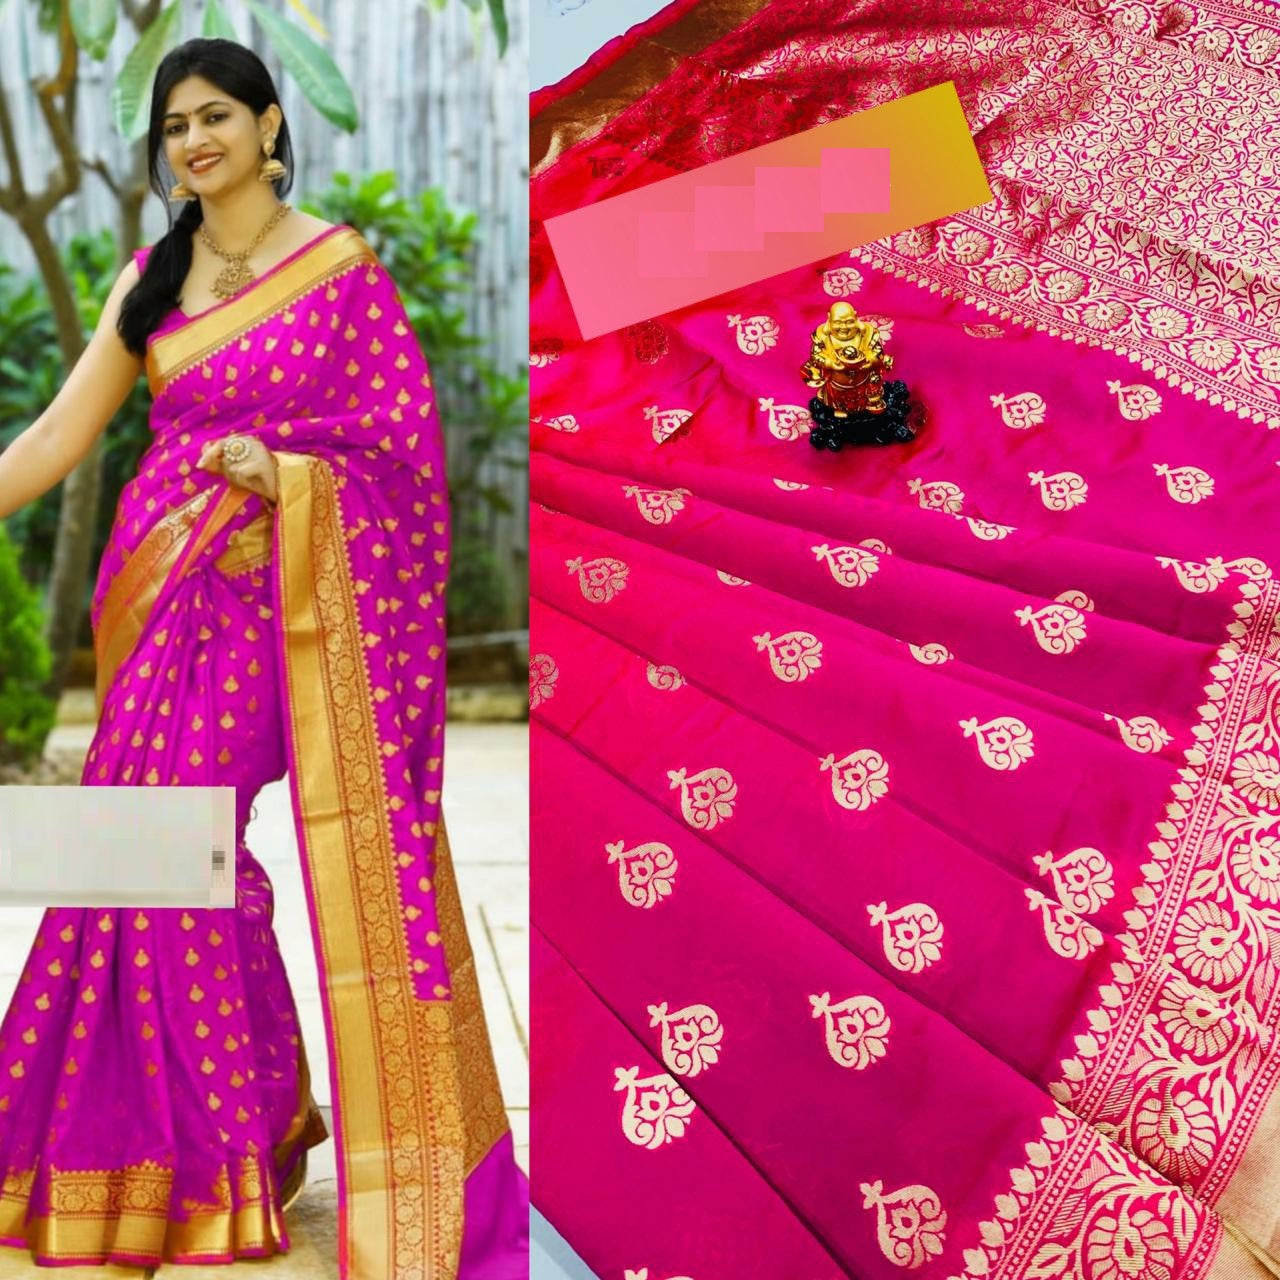 Astonishing Pink Colored Party Wear Women's Banarasi Silk Saree With Reach Pallu Border